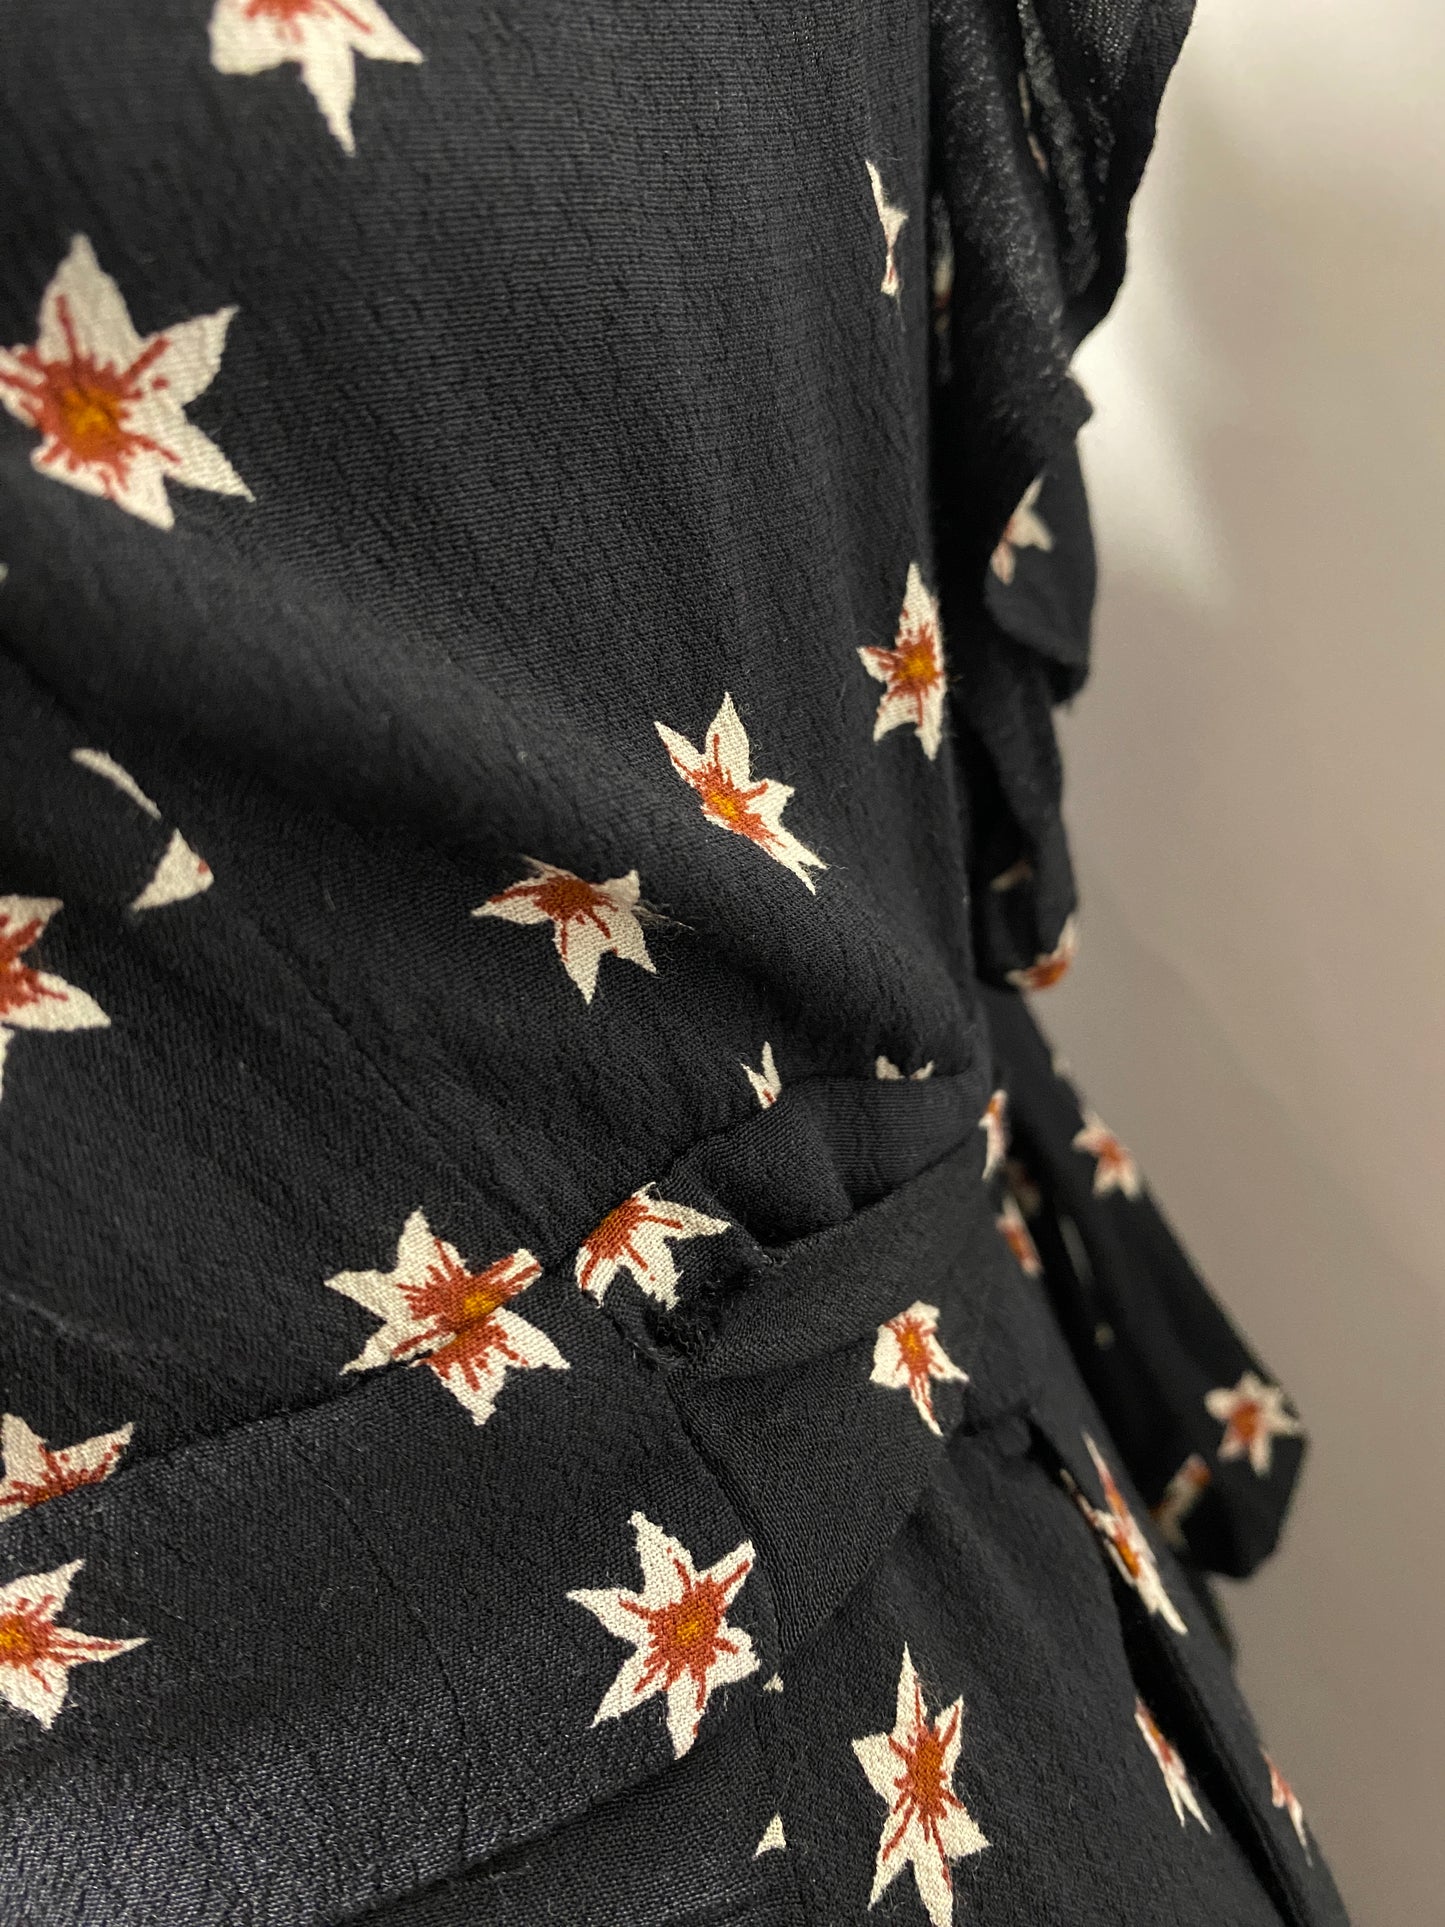 & Other Stories Black Floral Print Ruffle Midi Dress 6